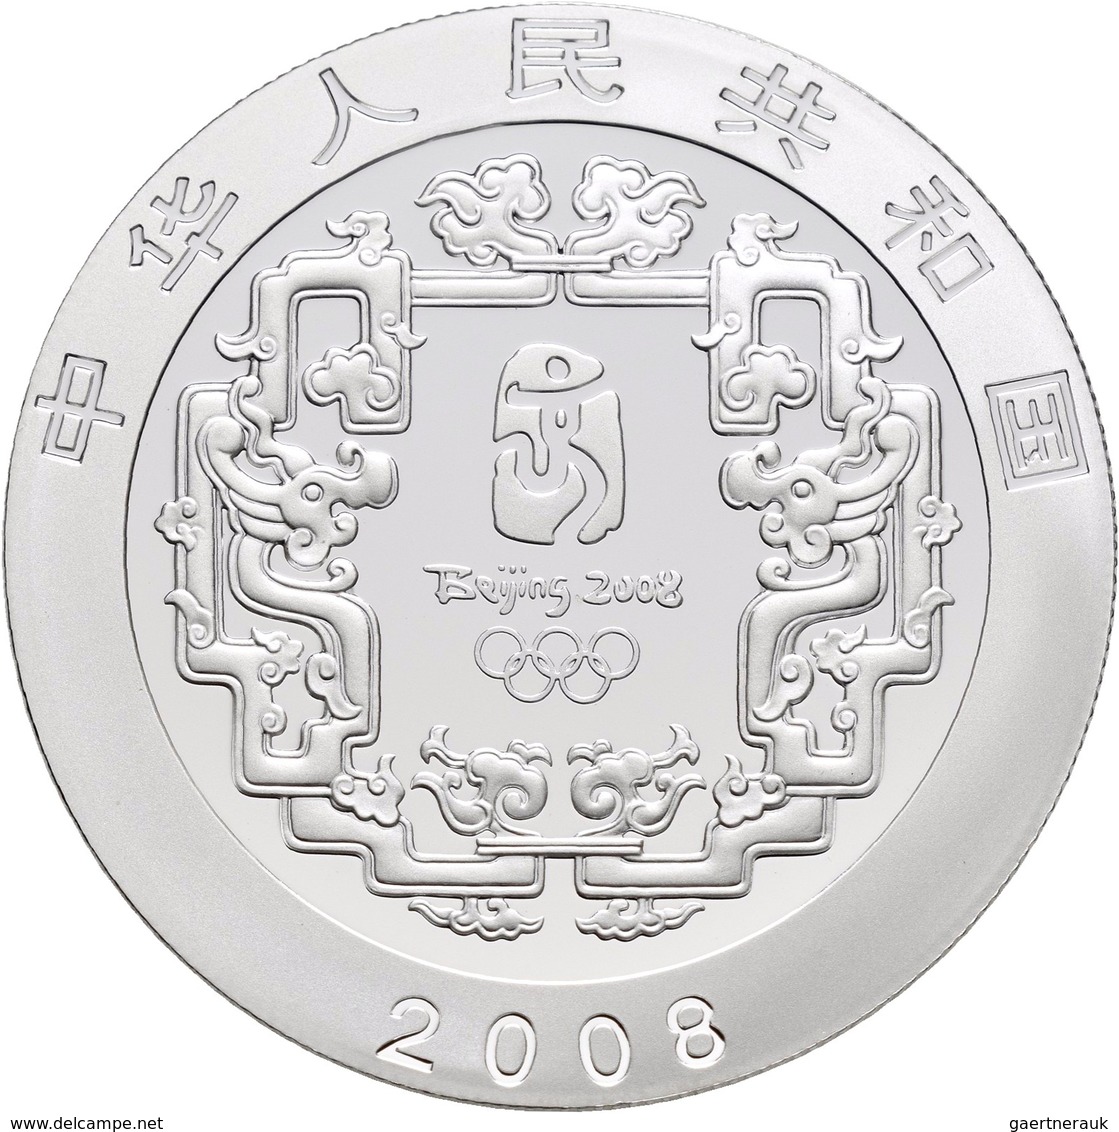 China - Volksrepublik: Set 4 x 10 Yuan 2008, Olympia Beijing, Silber, teilcoloriert, mit Zertifikate